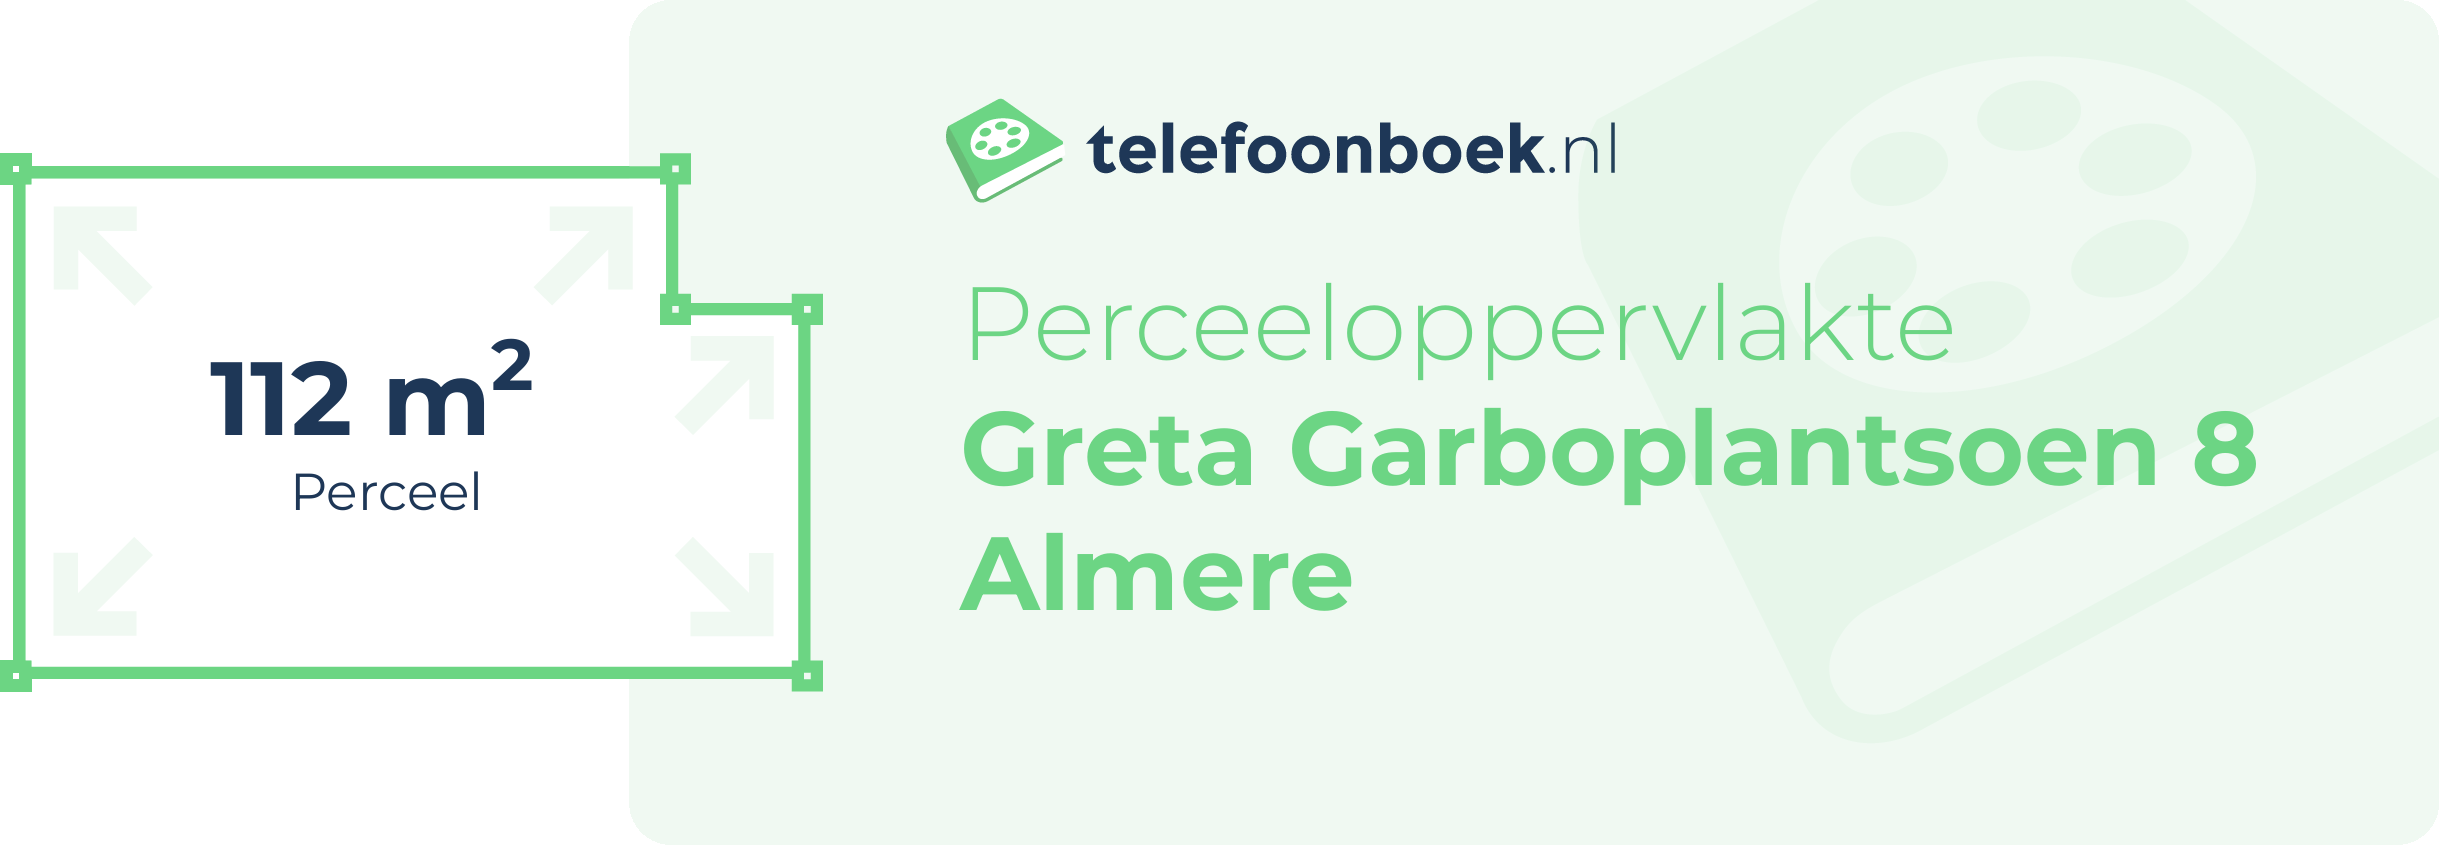 Perceeloppervlakte Greta Garboplantsoen 8 Almere